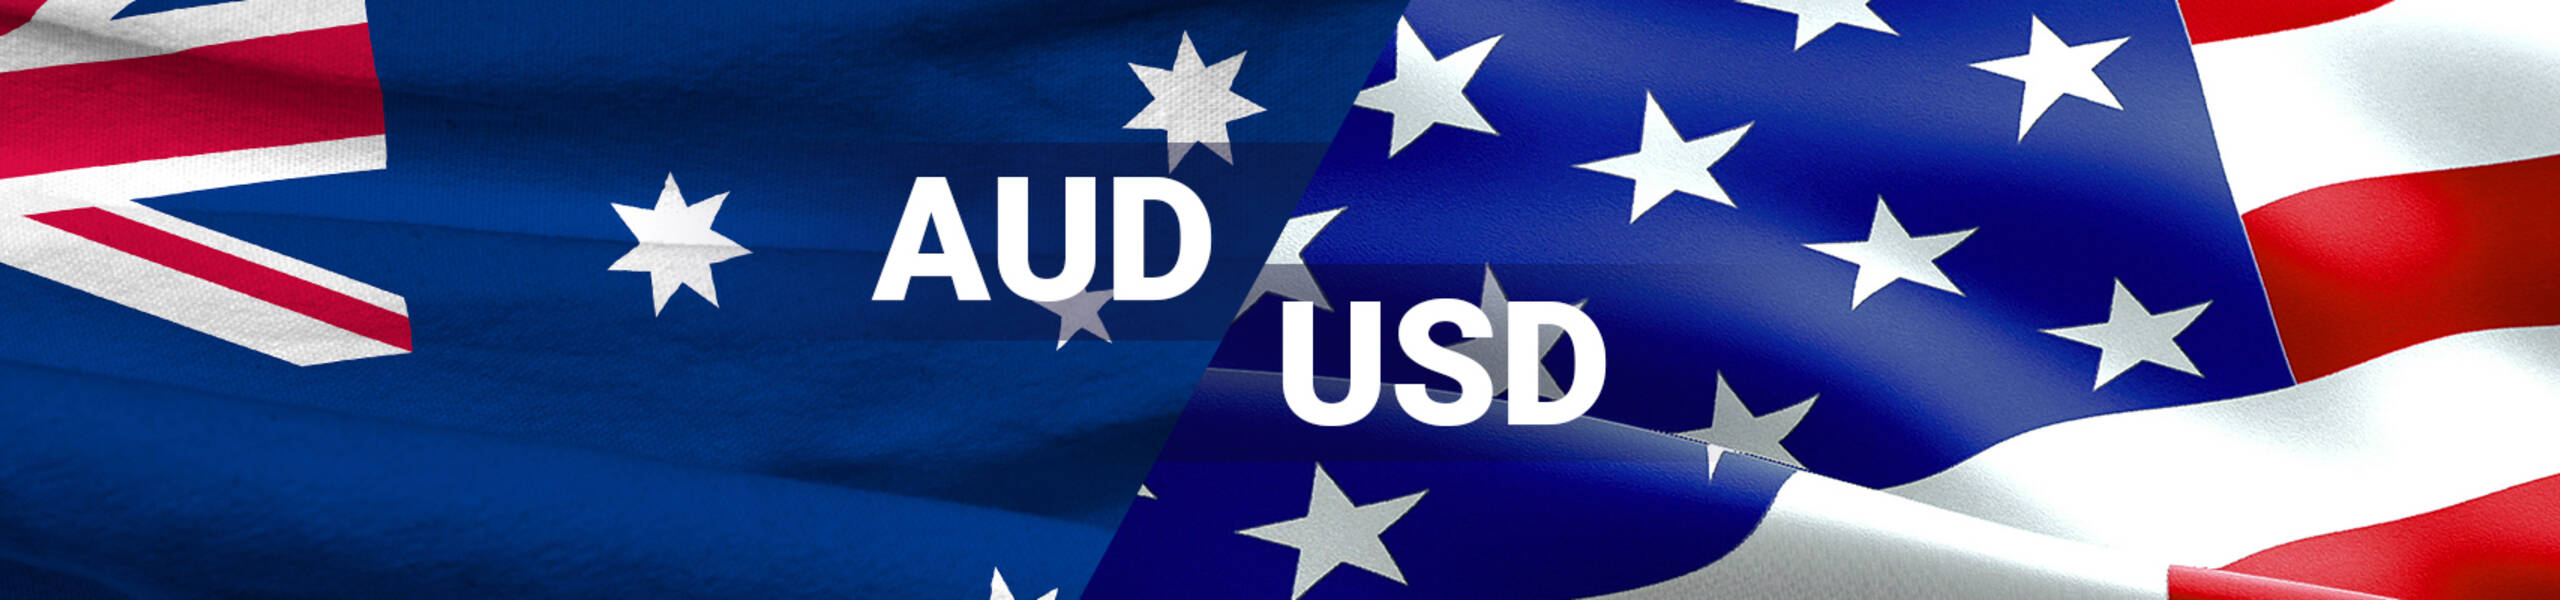 AUD/USD Trade Signal 2017/11/02